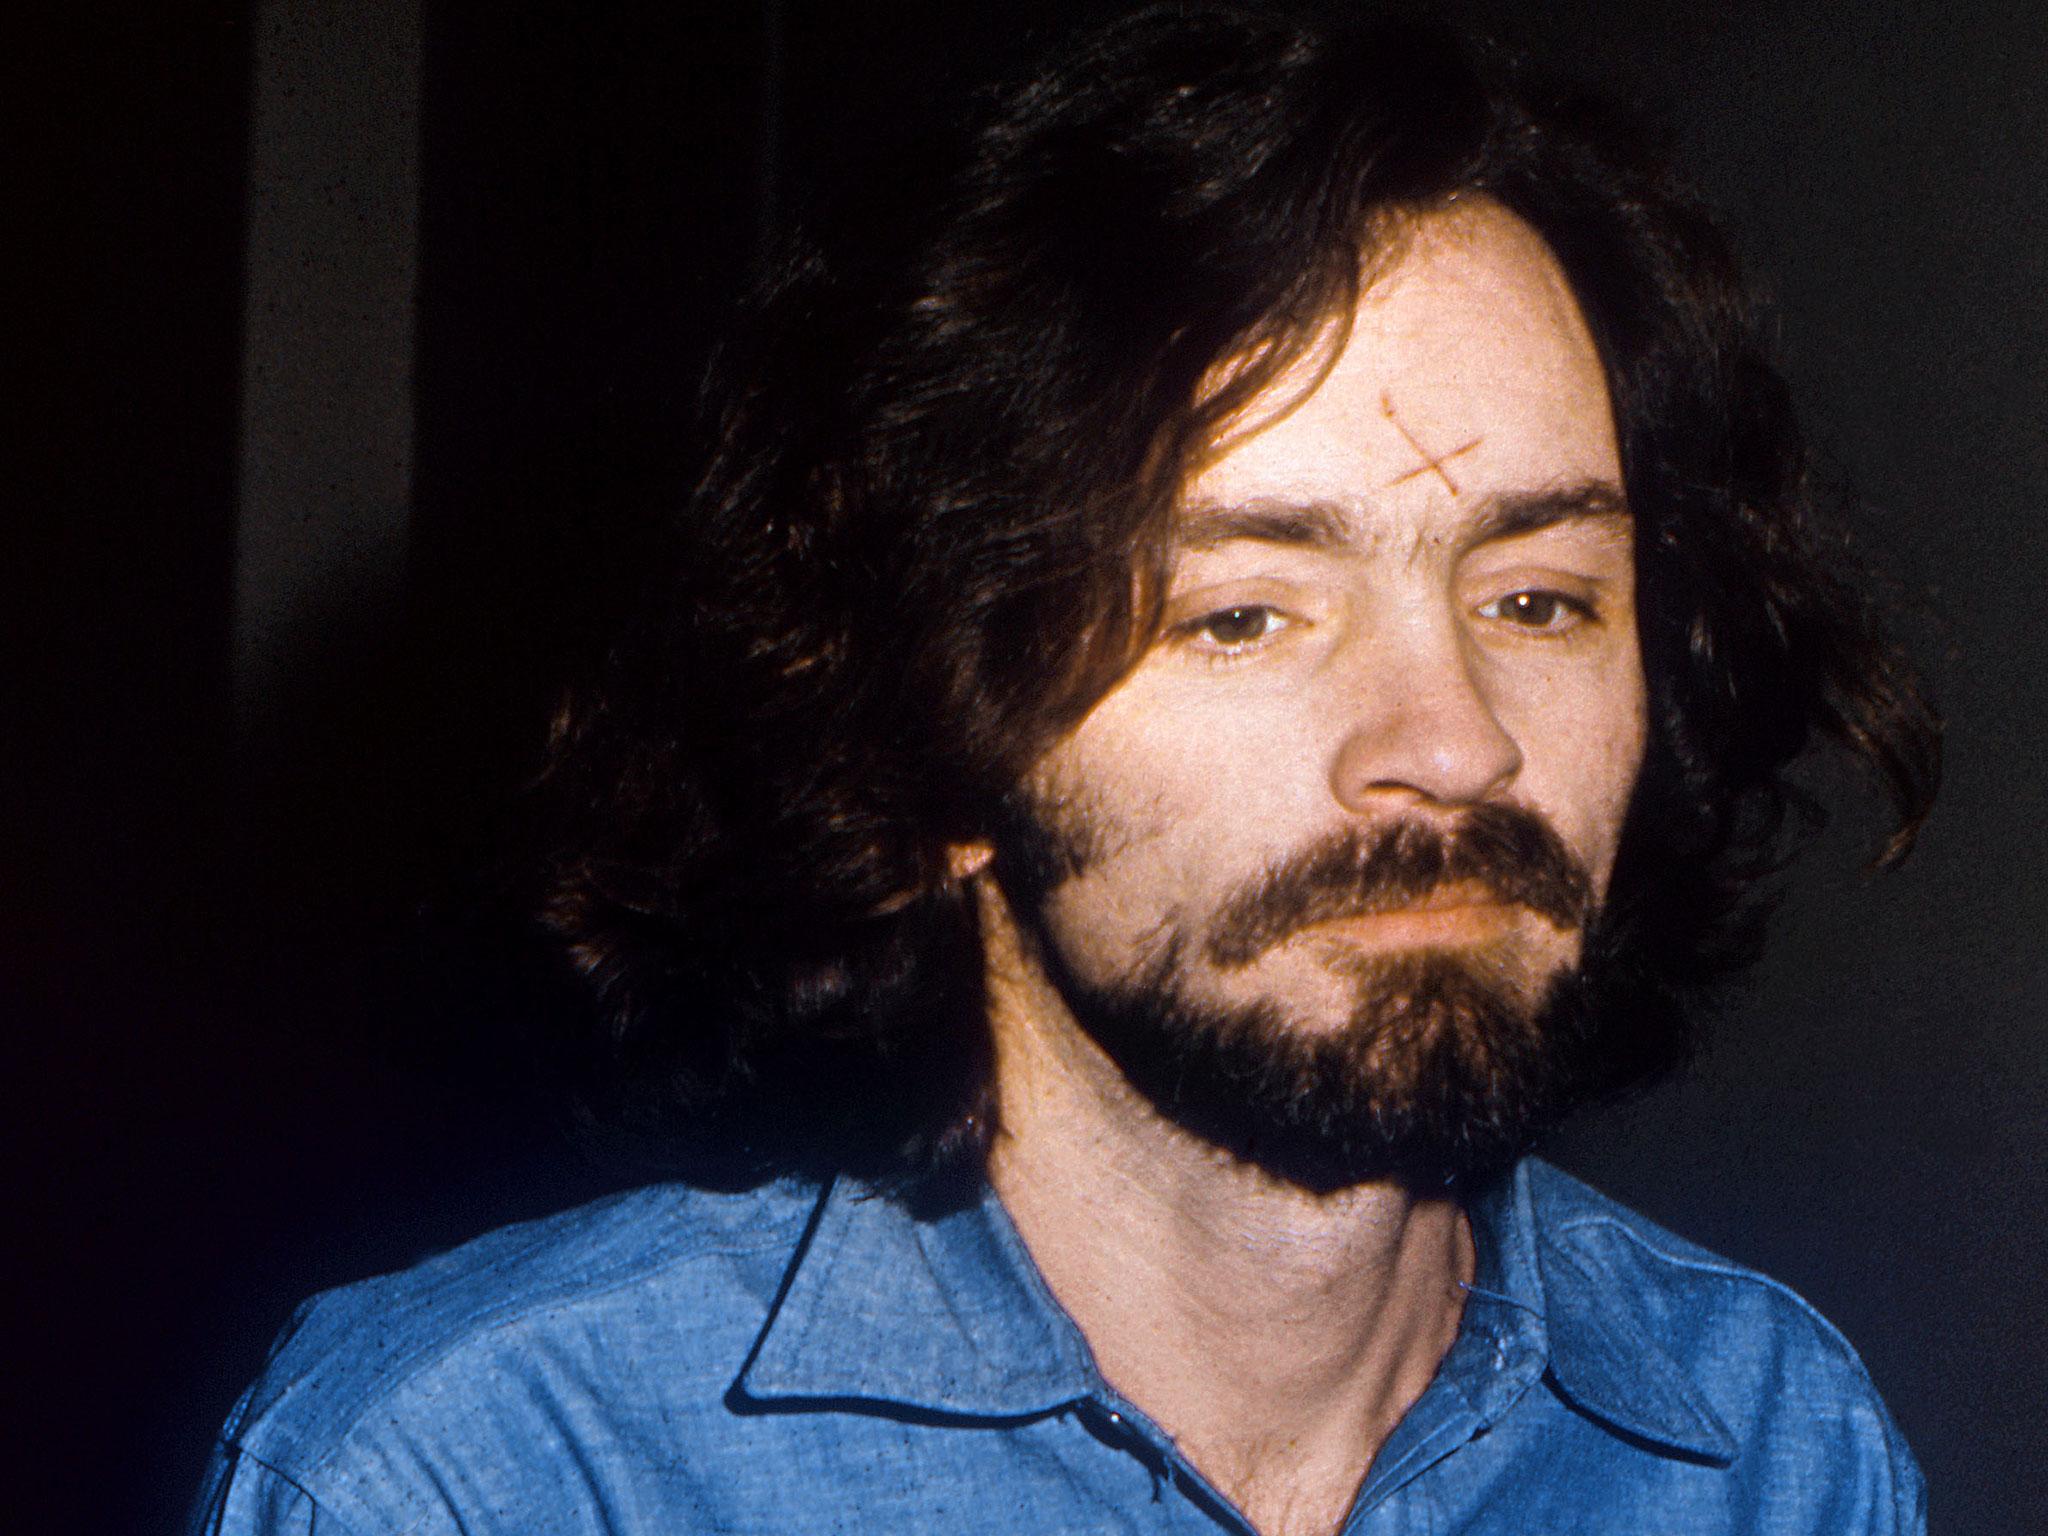 Murderer Charles Manson in 1970